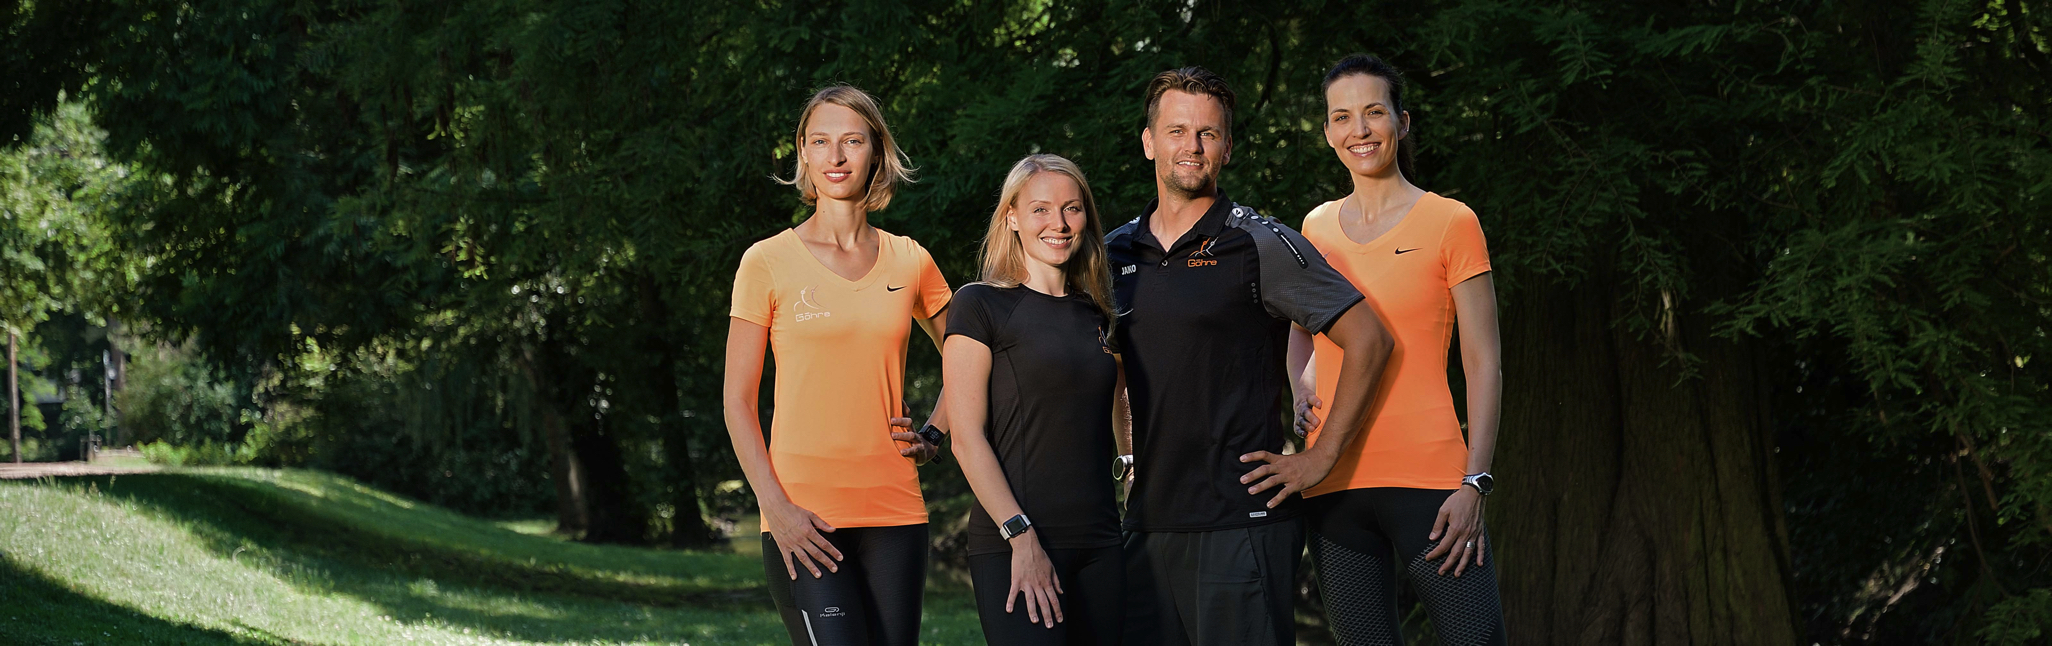 Personal Training Andrea Göhre - Team